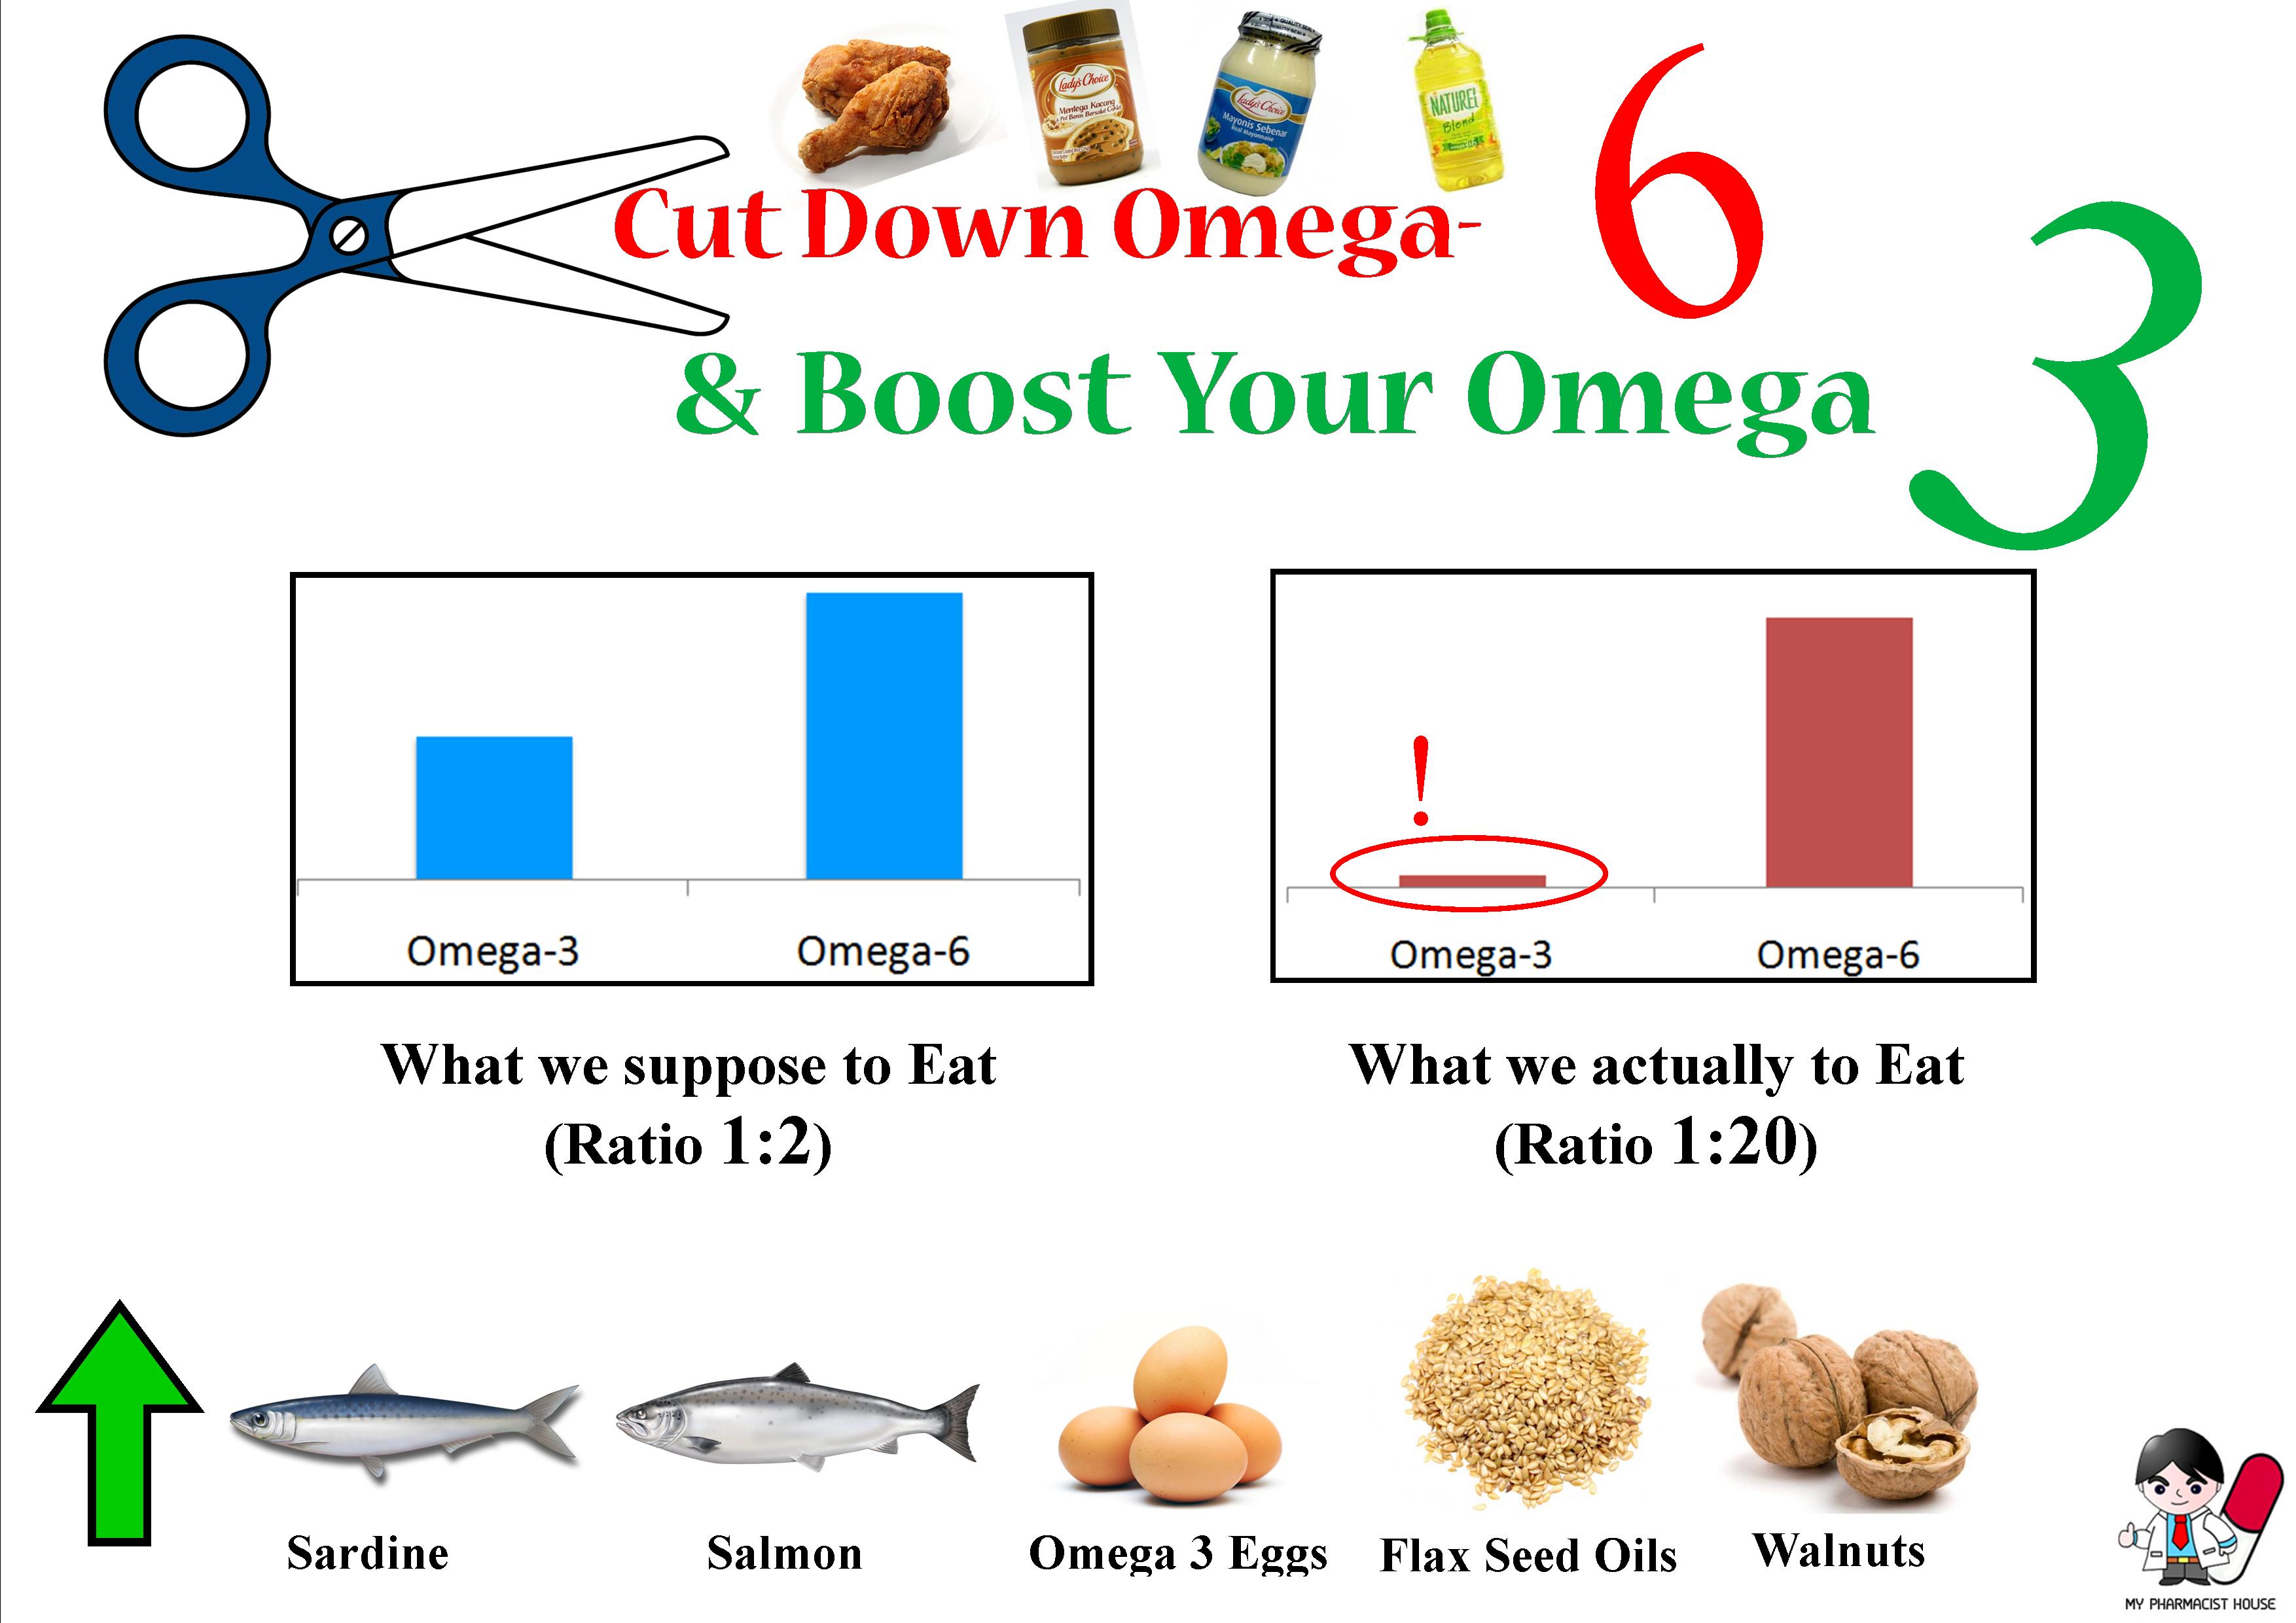 https://drthadgala.com/wp-content/uploads/2014/11/omega-3-omega-6-ratio1.jpg